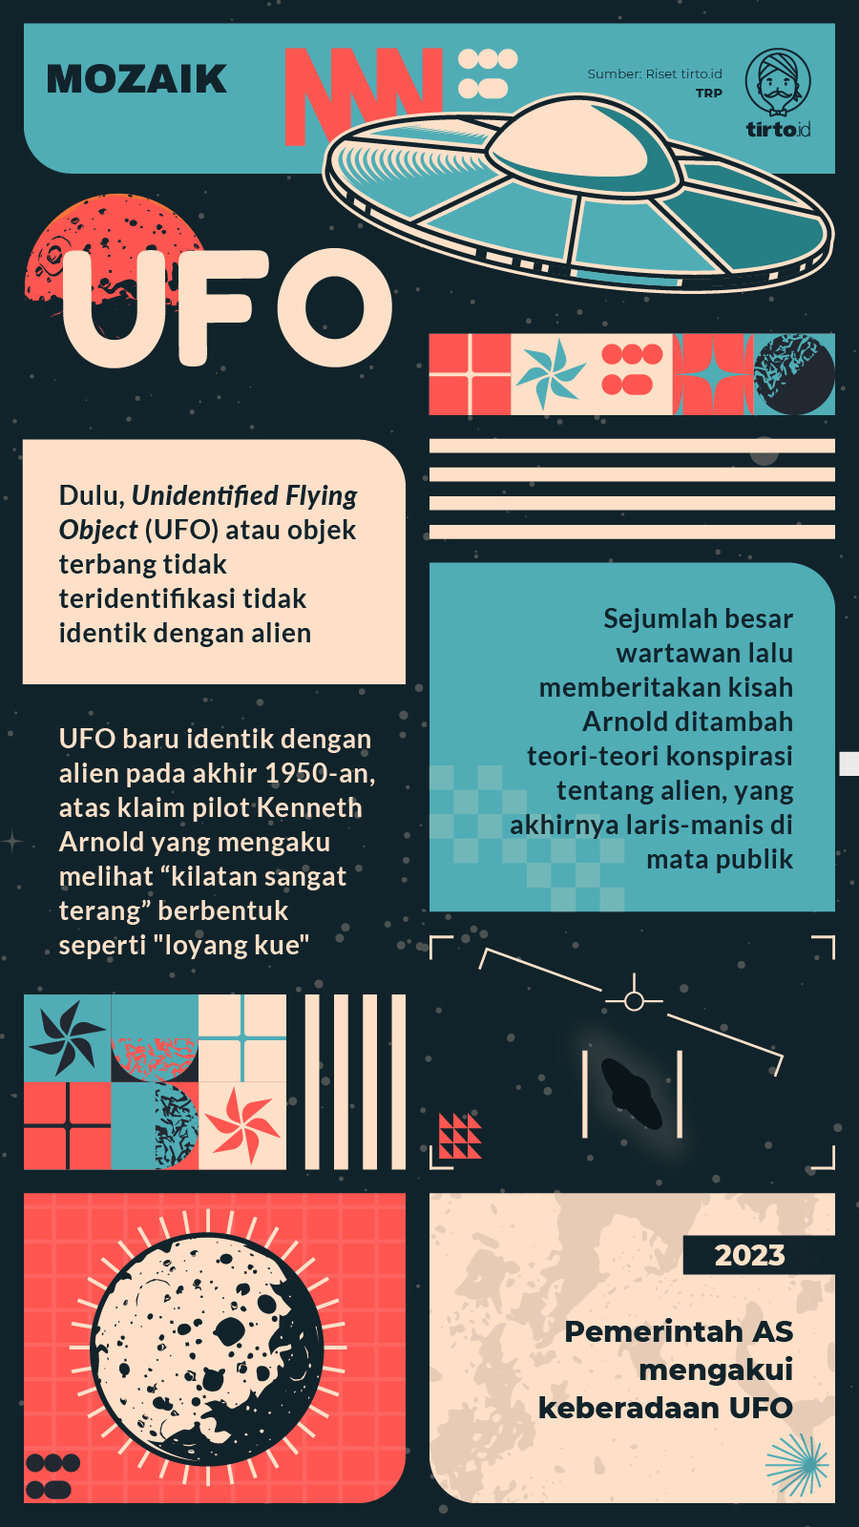 Infografik Mozaik UFO